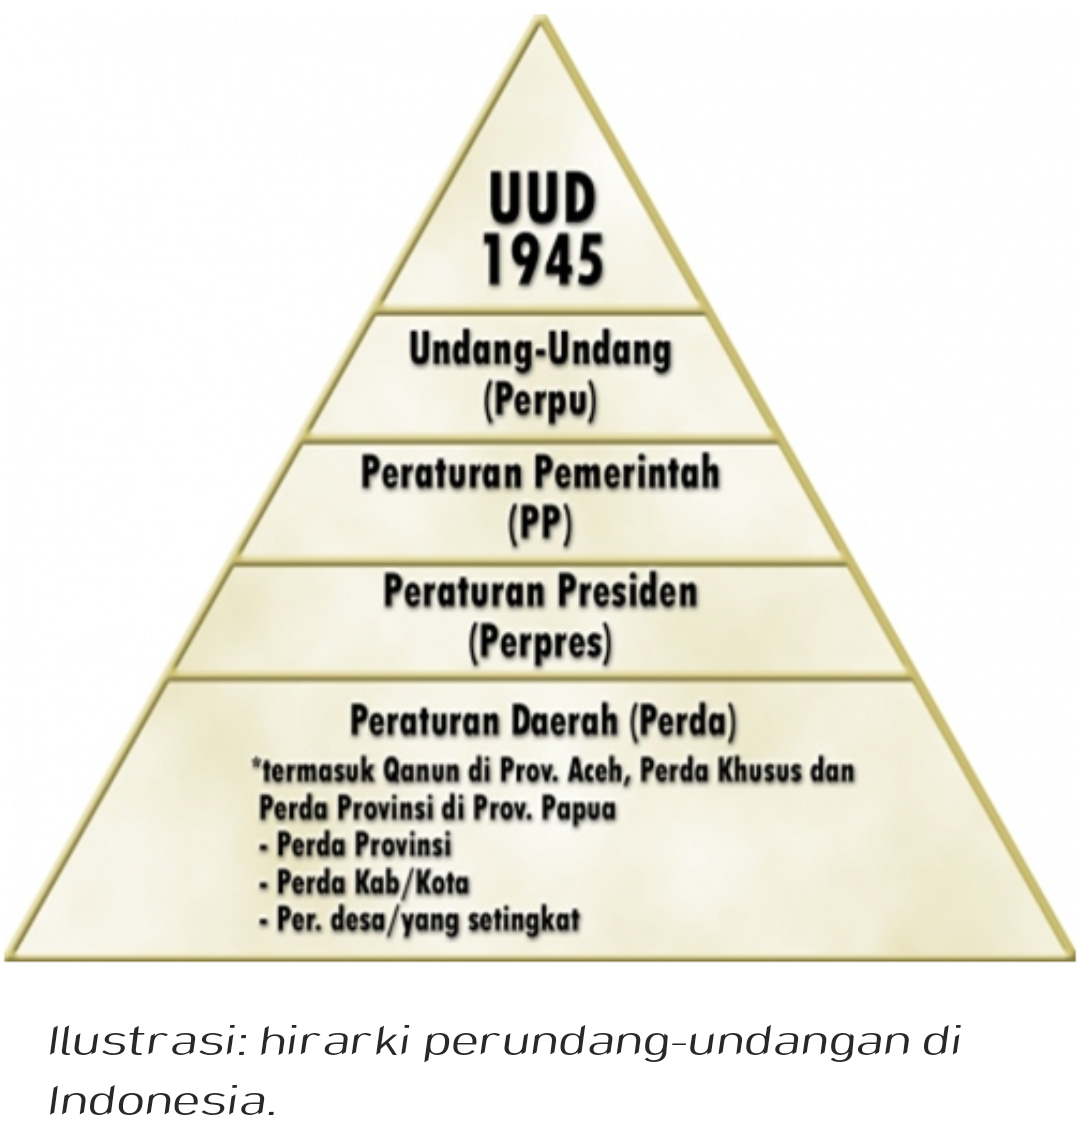 Bagaimana penerapan teori hans kelsen tentang hierarki peraturan perundang-undangan di indonesia?